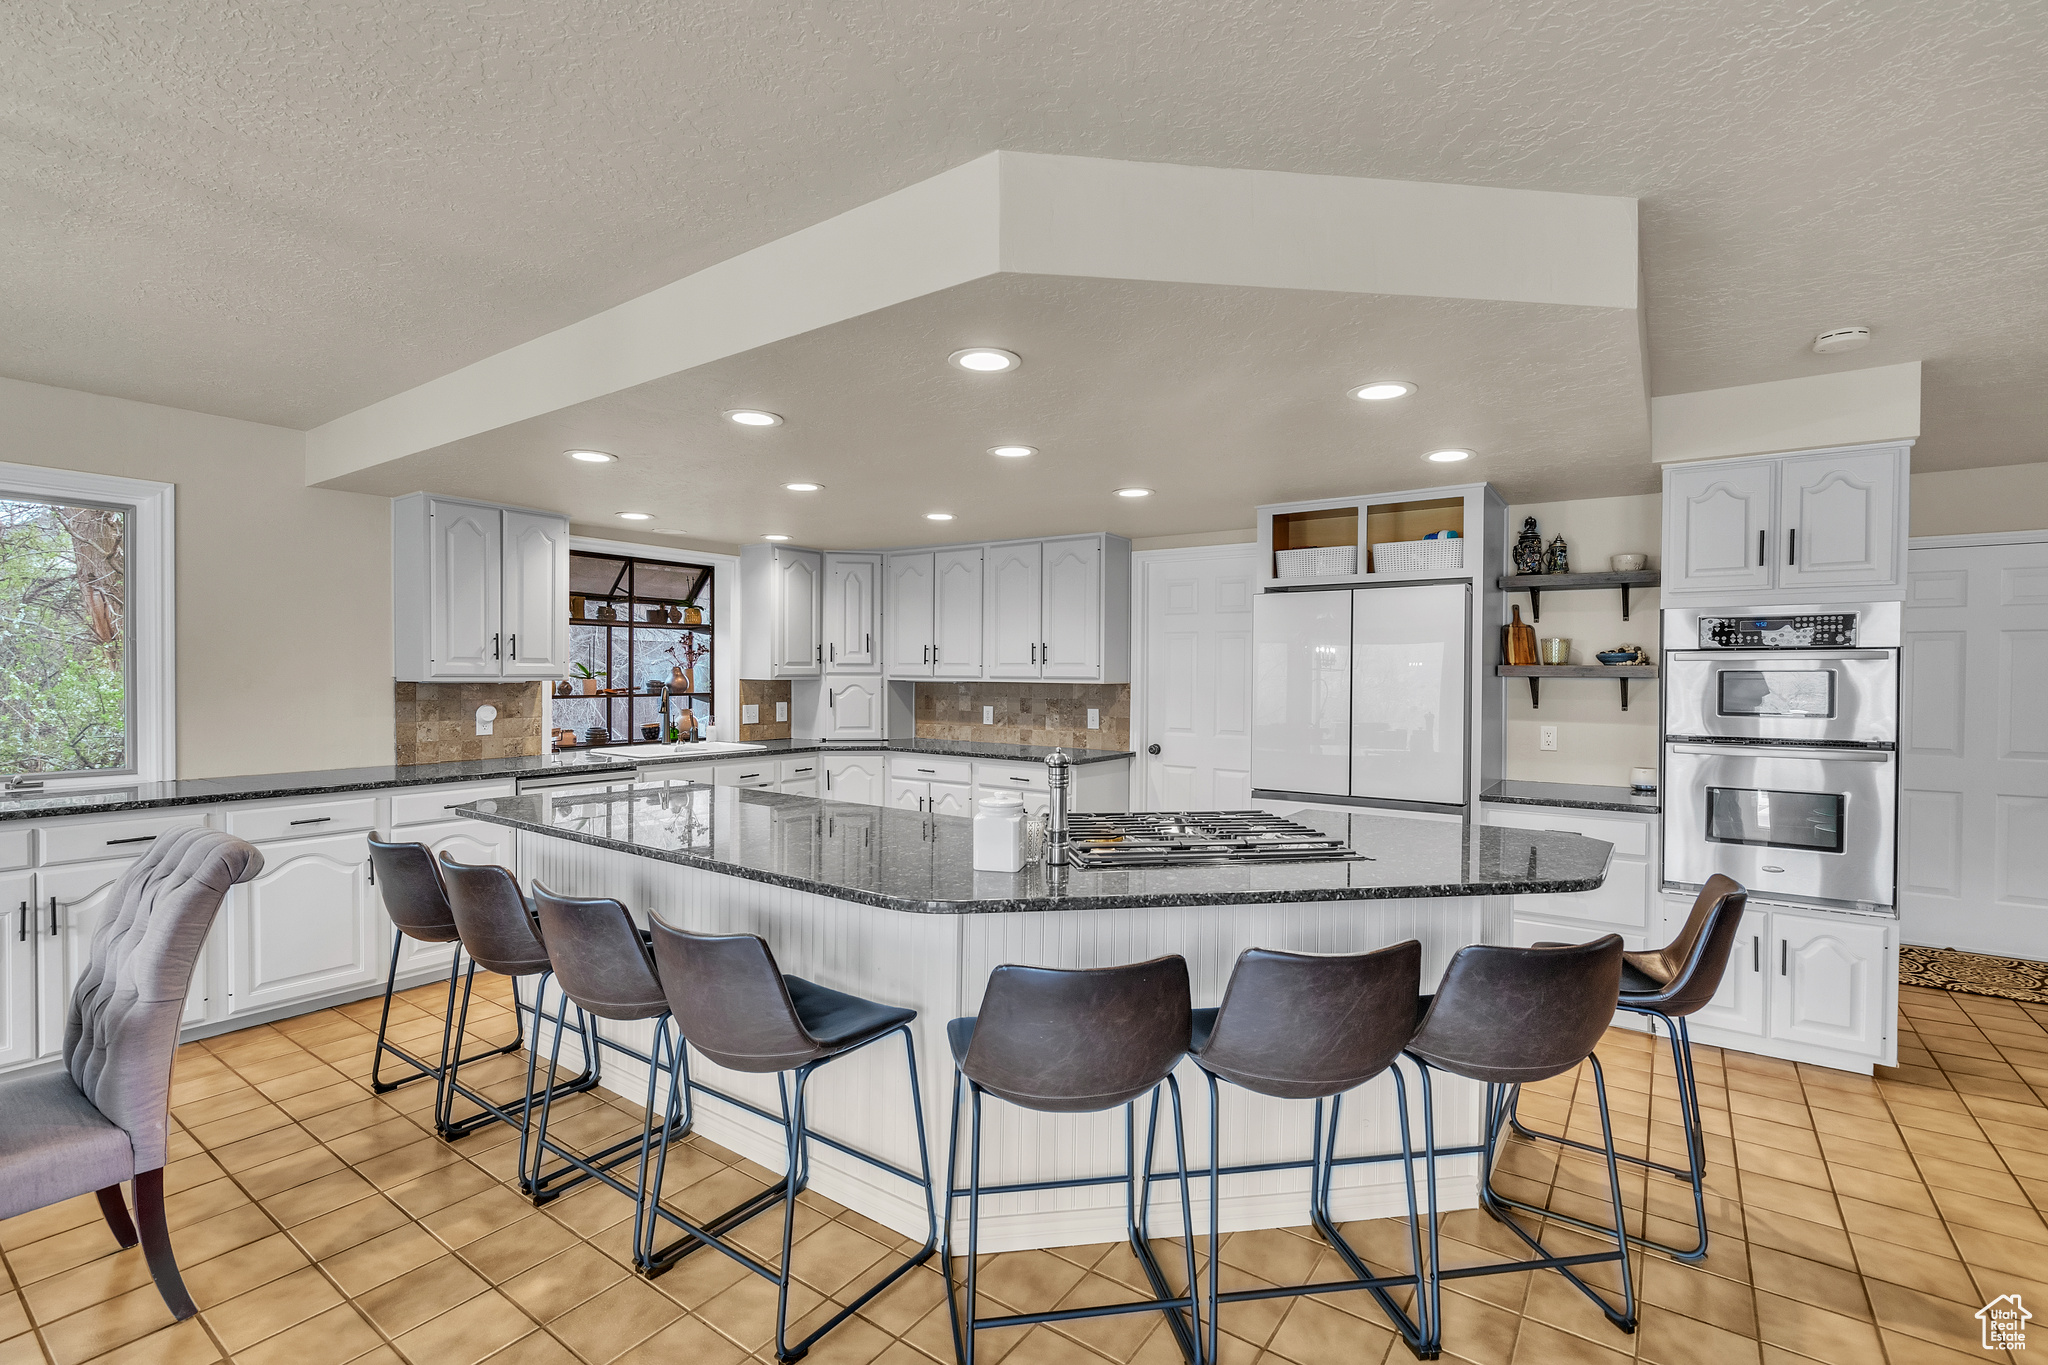 Kitchen featuring backsplash, a kitchen island, a breakfast bar area, and stainless steel appliances